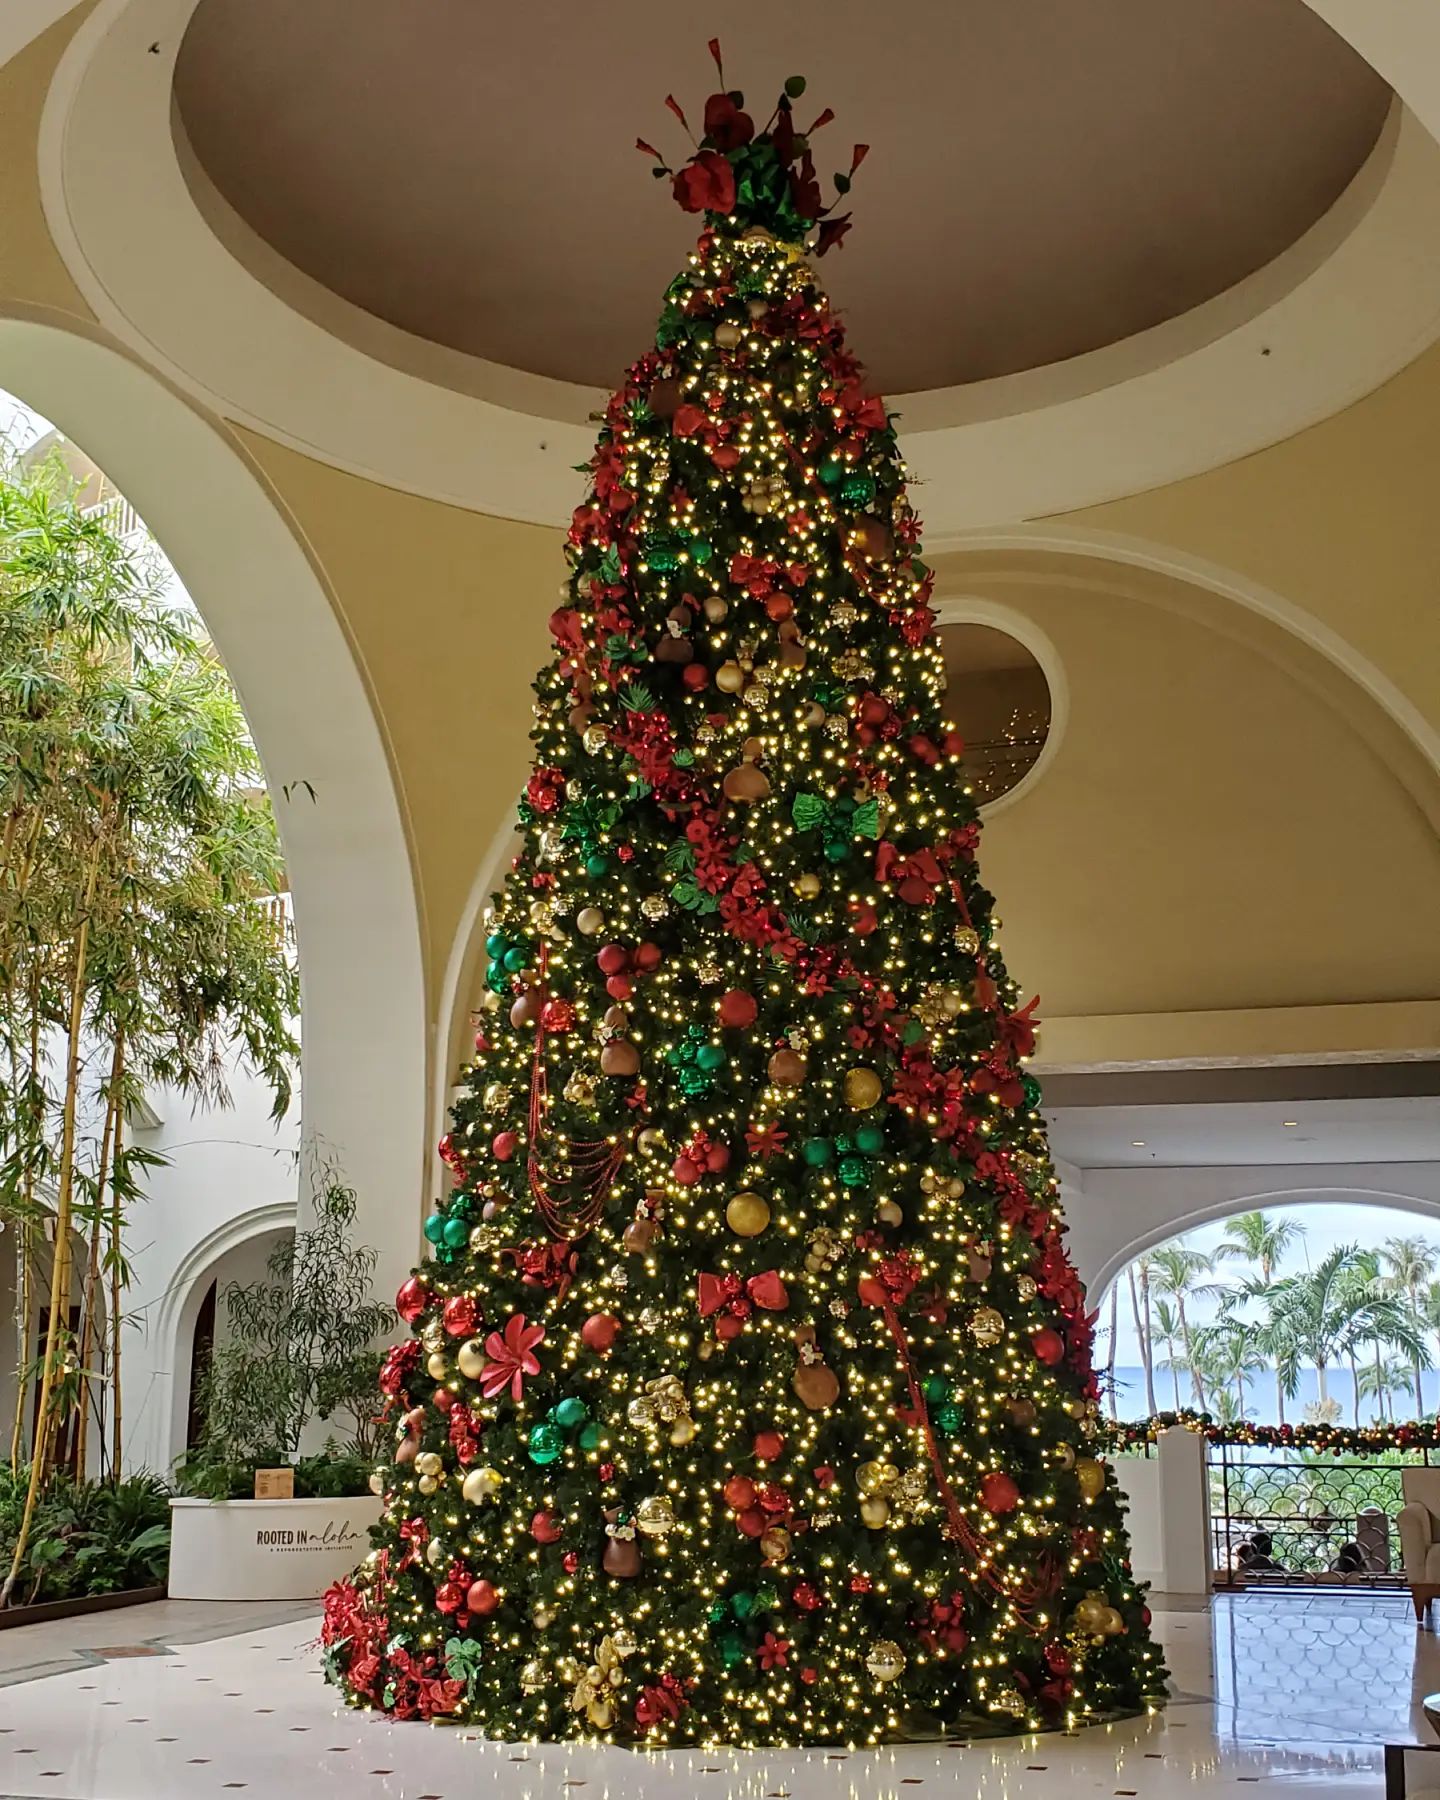 The most beautiful Christmas tree in the world is at the Kea Lani in Wailea 🎄🎅
🌴
🌺
🌅
⛳
Jill McGowan ~ Maui Realtor
808.658.0575
Jill@LuxuryHomesMaui.com
🌈
🌊
😎
#MerryChristmas #MeleKalikimaka #christmastree #Wailea #Kihei #Hawaii #Makena #Maalaea #Maluaka #Maui  #Lahaina  #Kapalua  #mauilifestyle  #luxuryhomesMaui #mauicondos #mauihomes #resortlife #luxuryresortsmaui